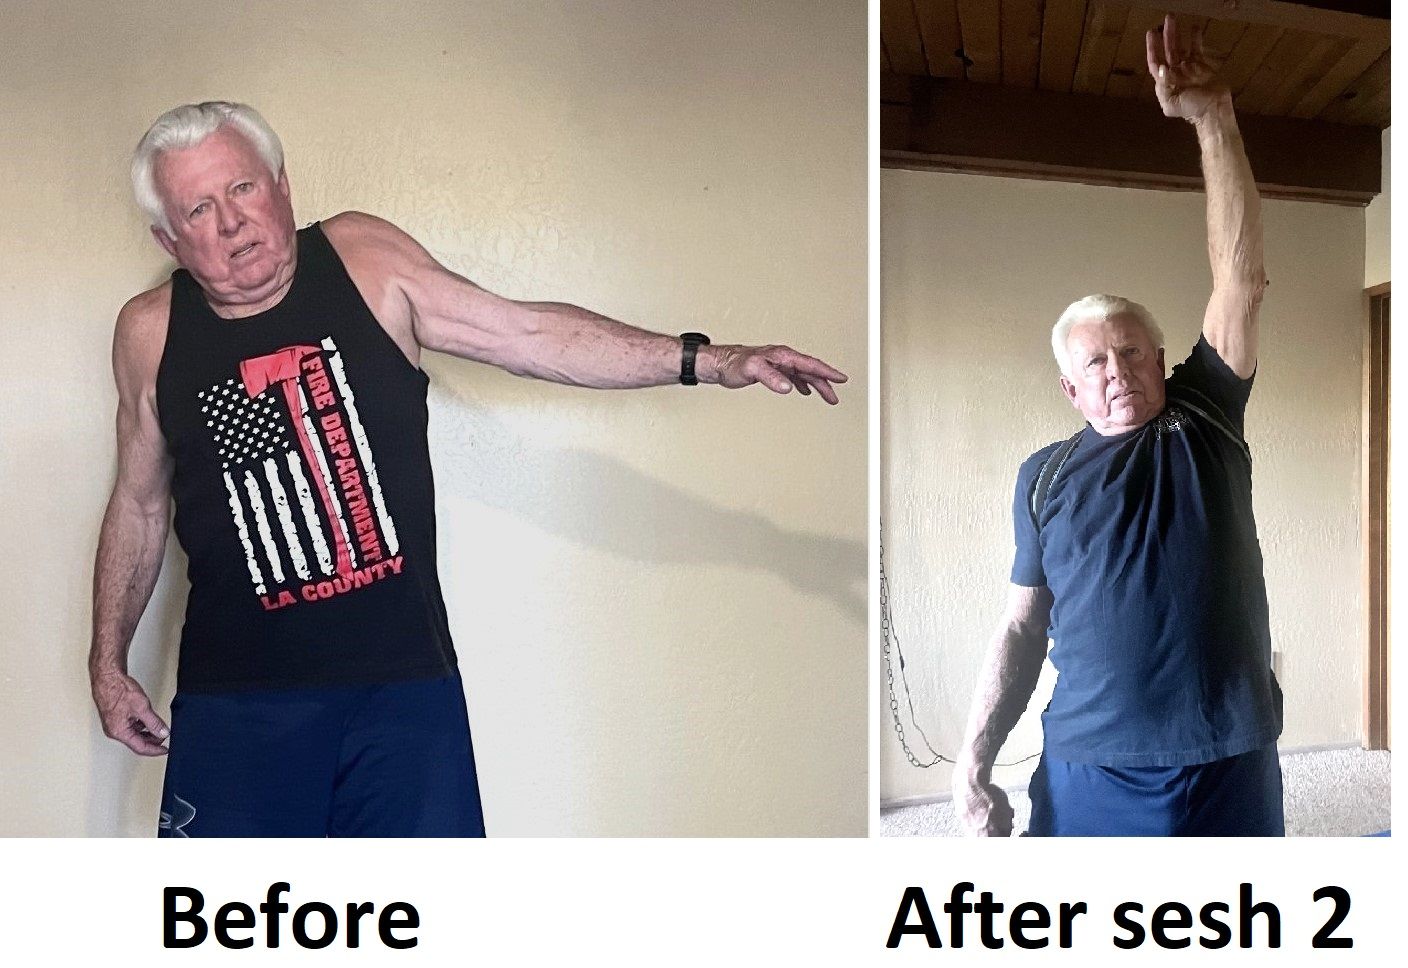 Before and after increased arm & shoulder mobiltiy